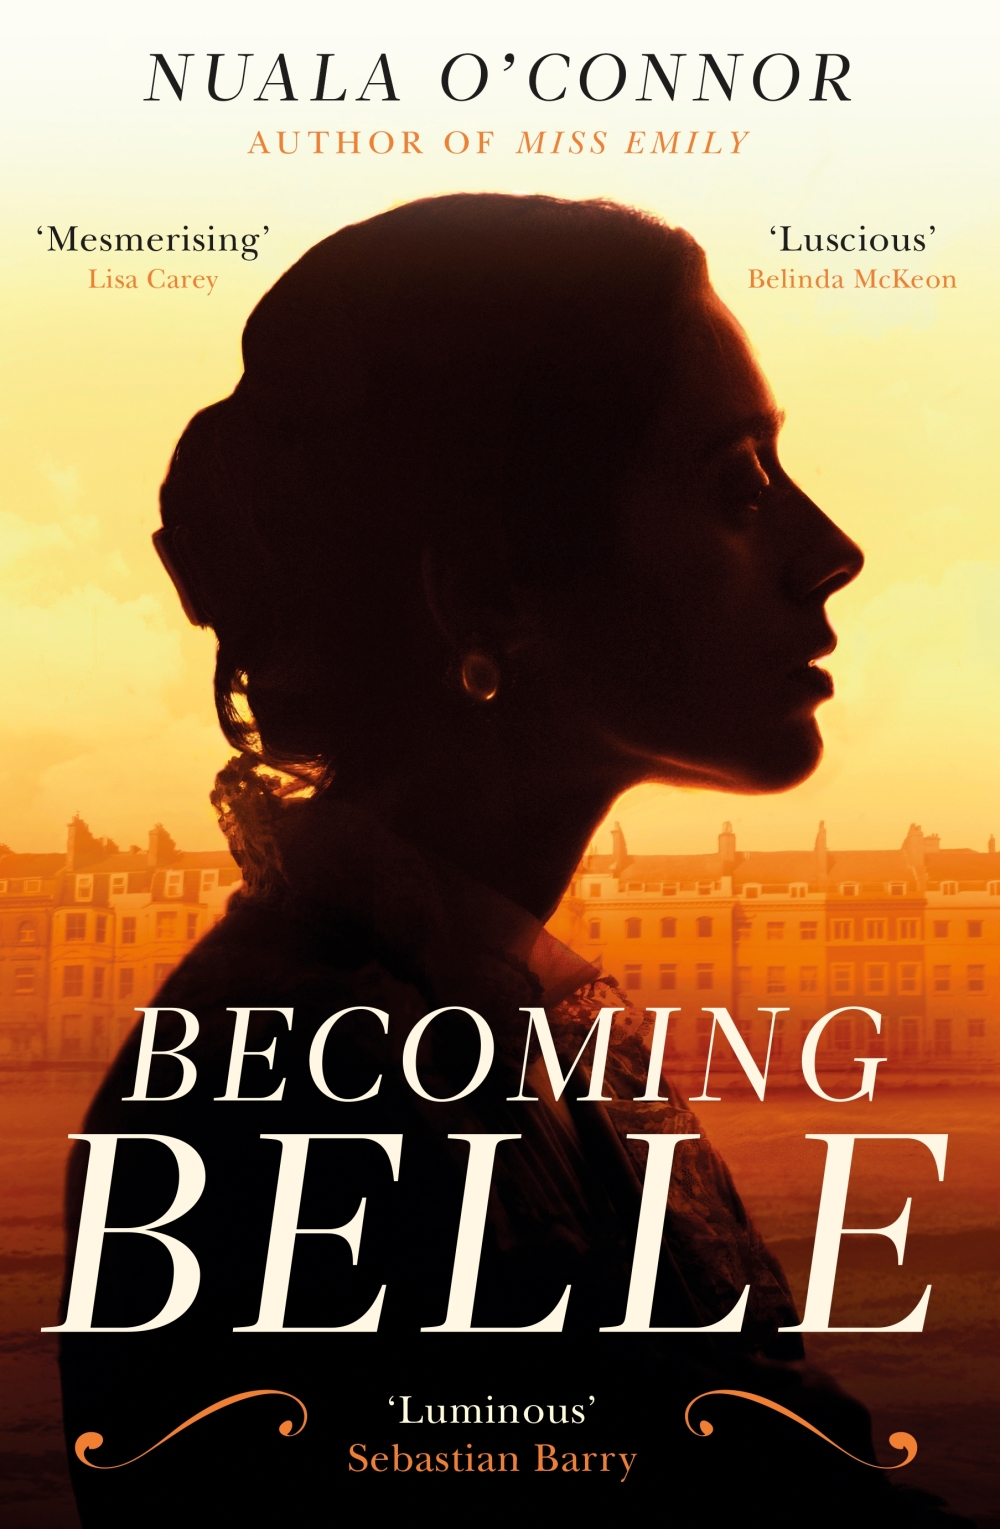 Becoming Belle UK cover.jpg